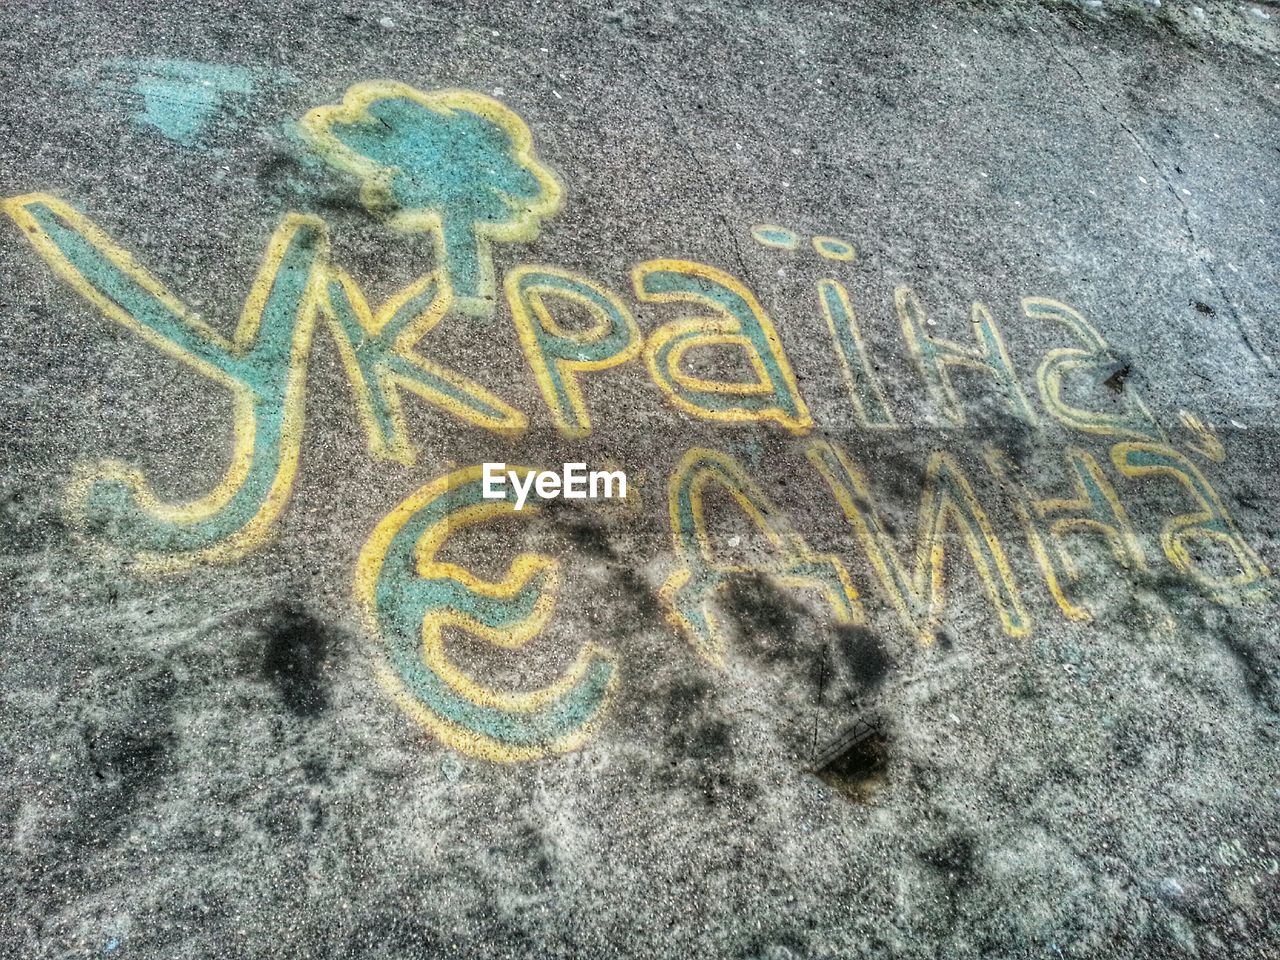 Cyrillic script on asphalt